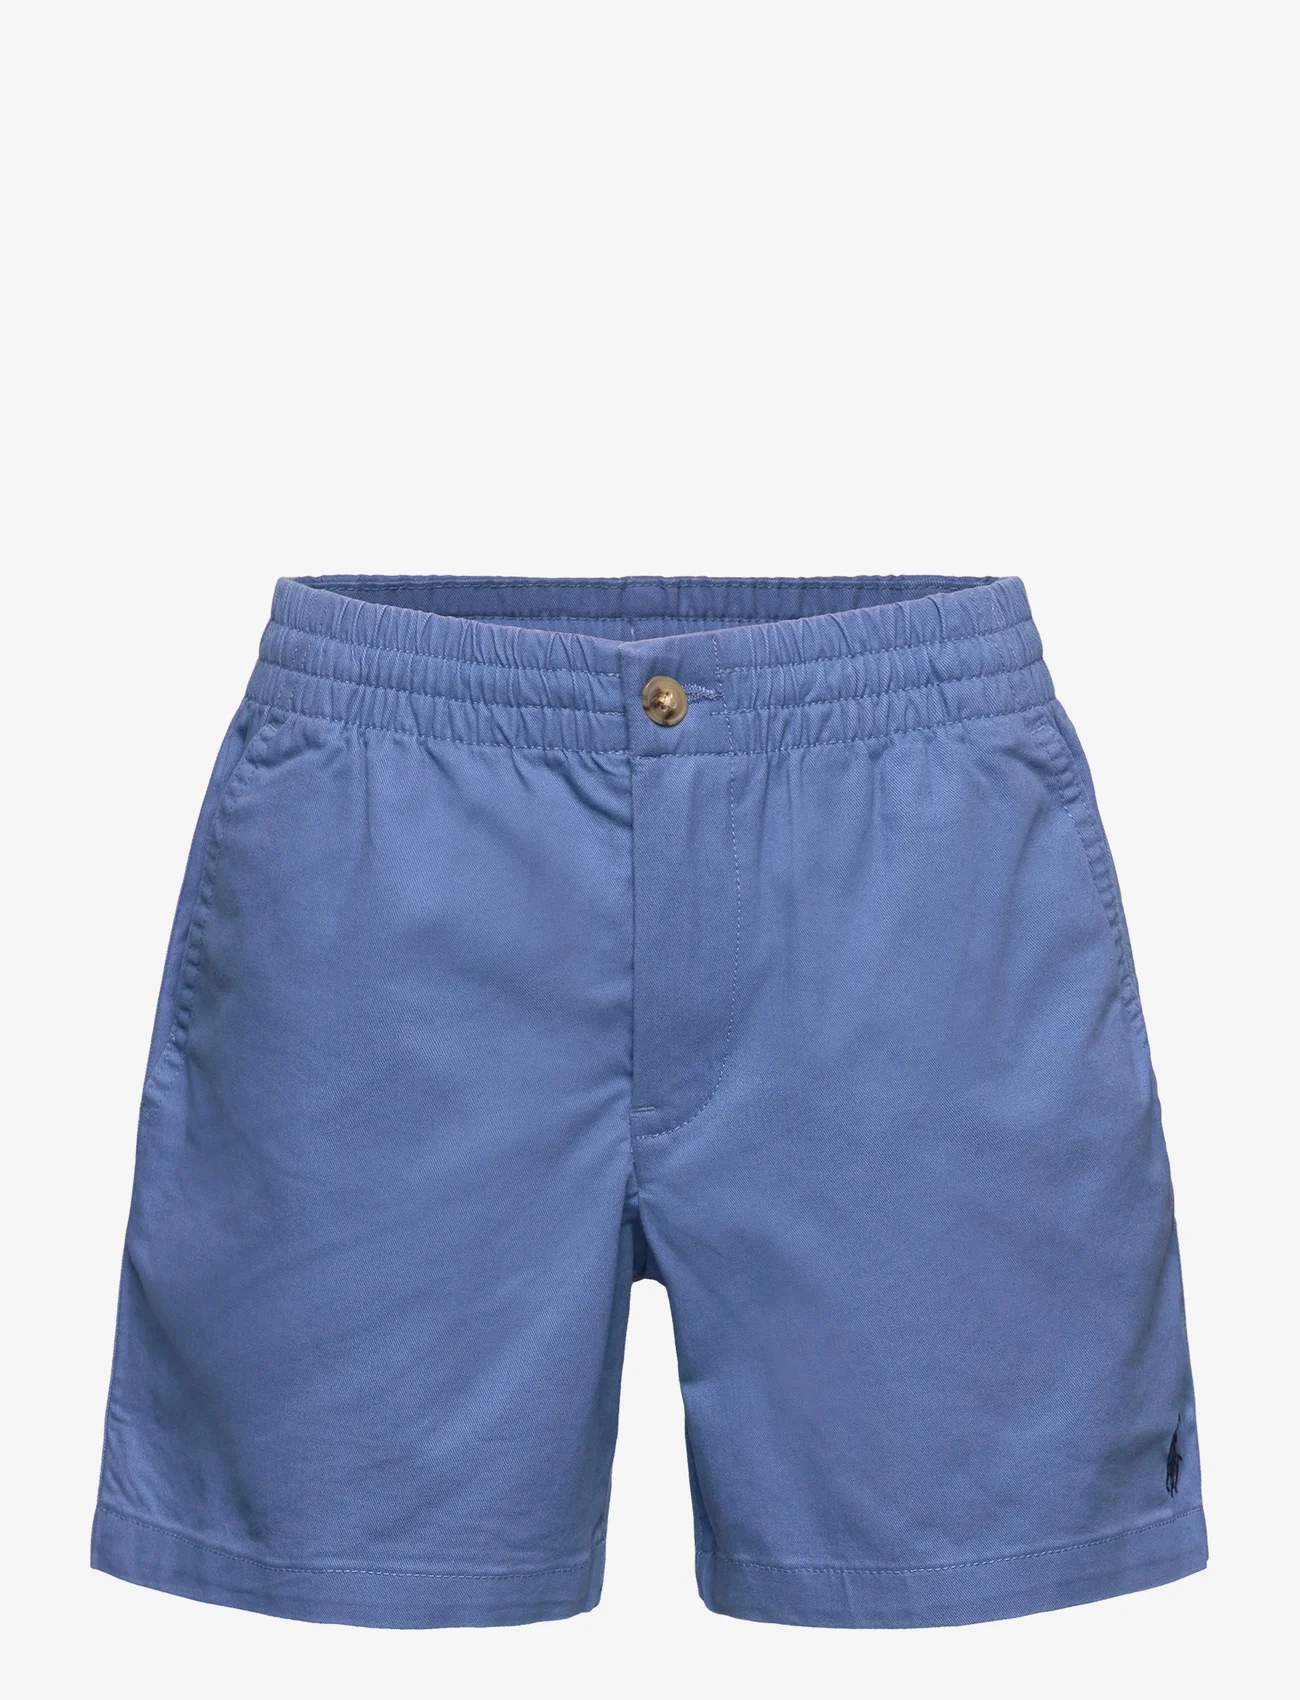 Ralph Lauren Kids - Polo Prepster Flex Abrasion Twill Short - chino shorts - nimes blue - 0